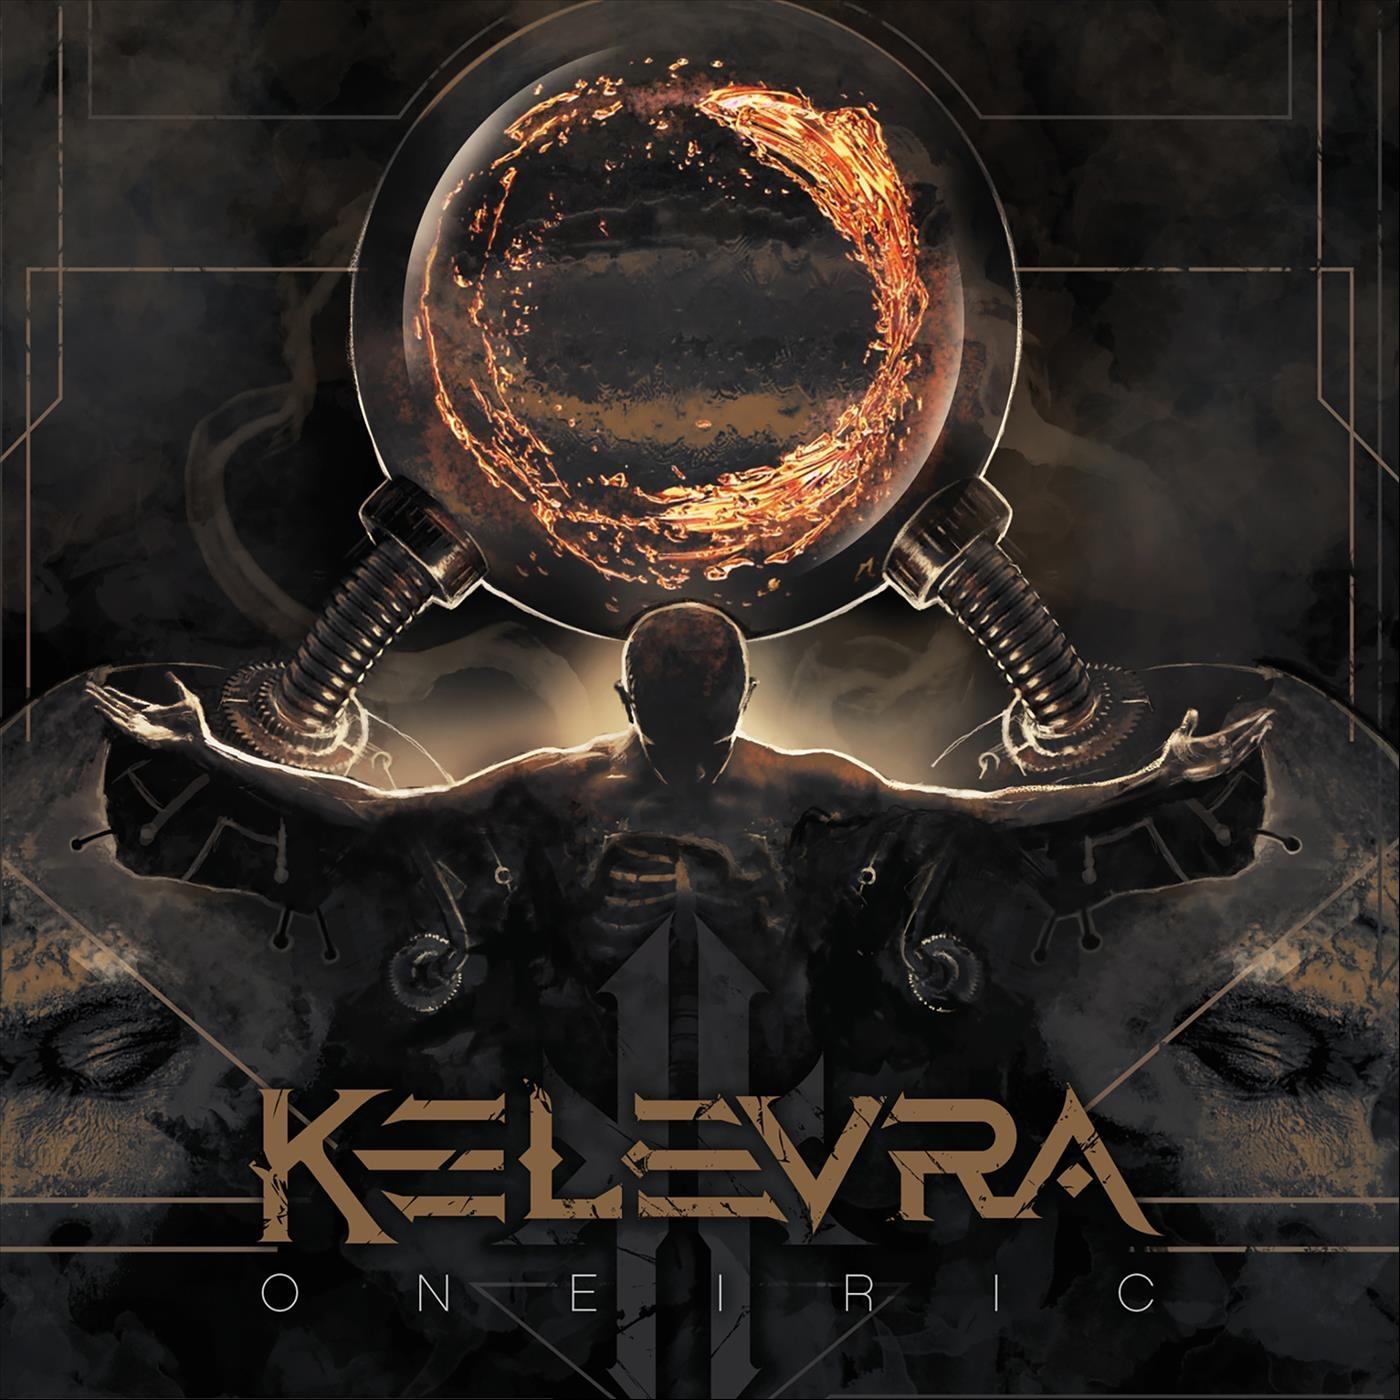 Kelevra - Self-Extinct